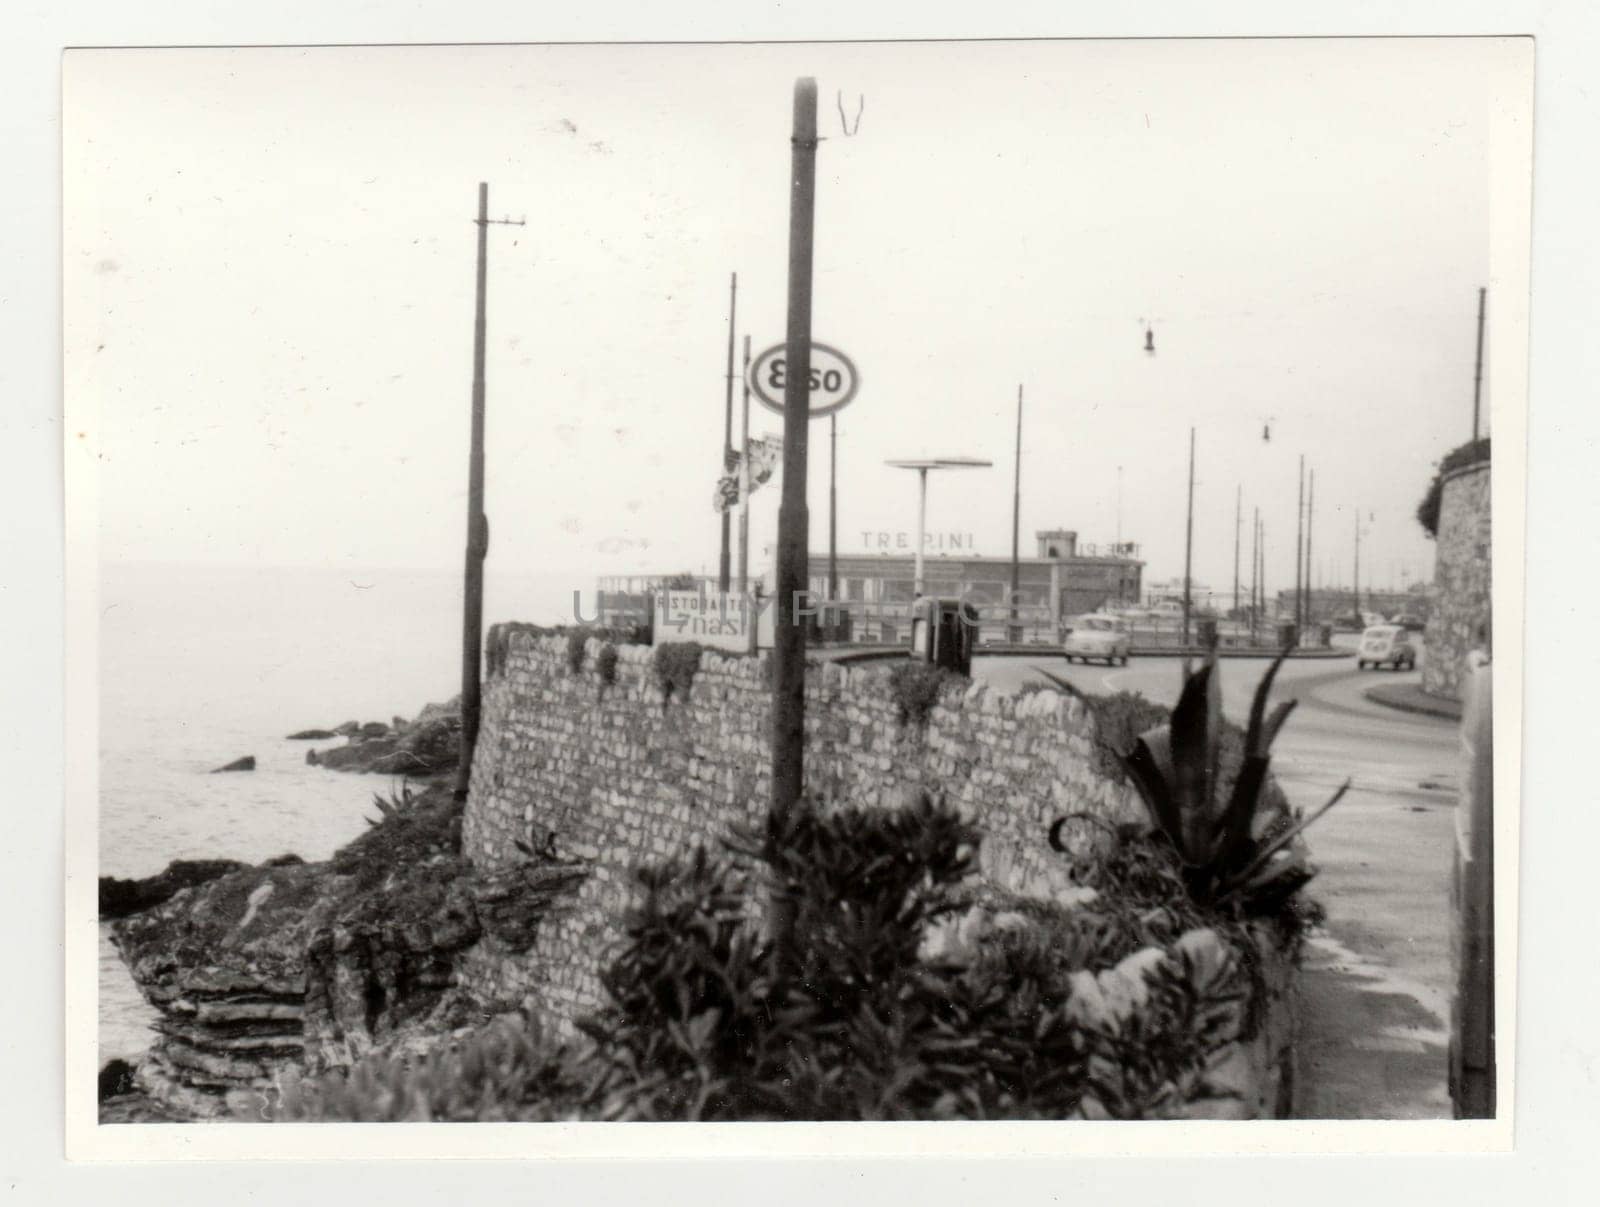 Vintage photo shows the sea shore - the Italian riviera. Retro black and white photography. Circa 1970s. by roman_nerud